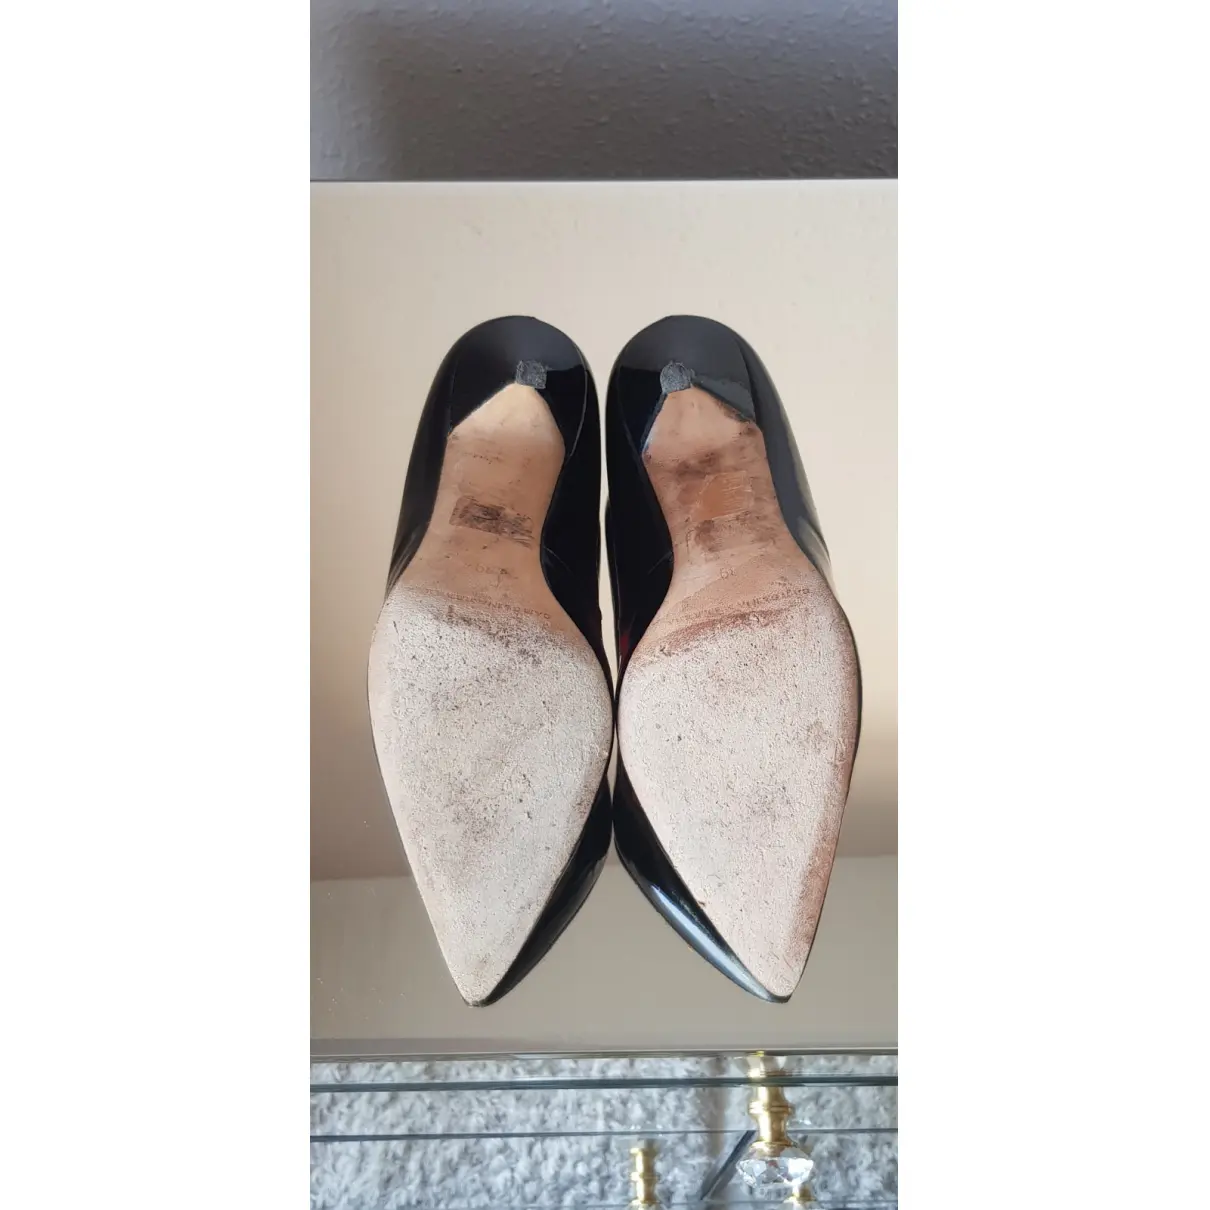 Patent leather heels Carolina Herrera - Vintage